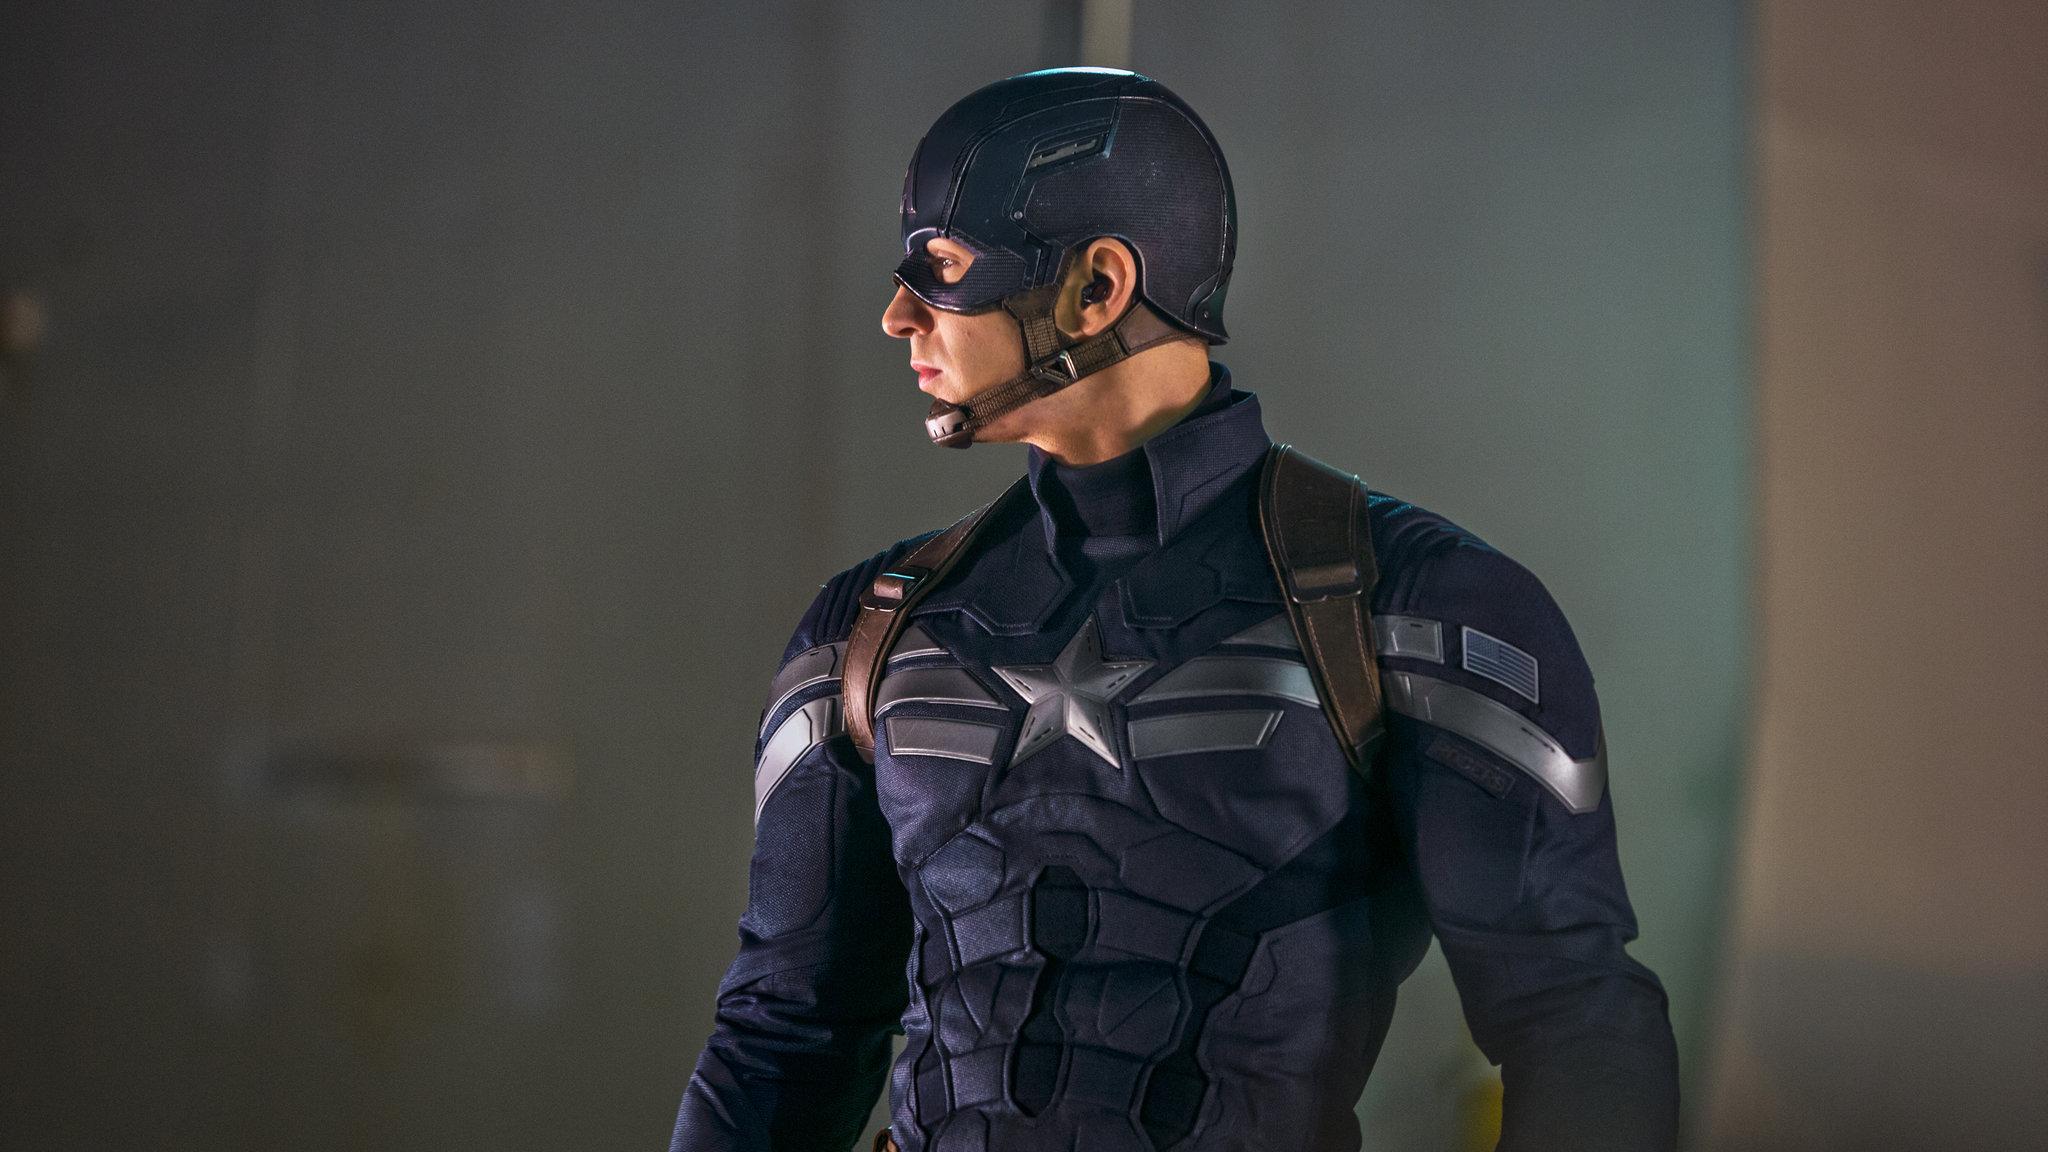 Hero Returns in 'Captain America: The Winter Soldier'